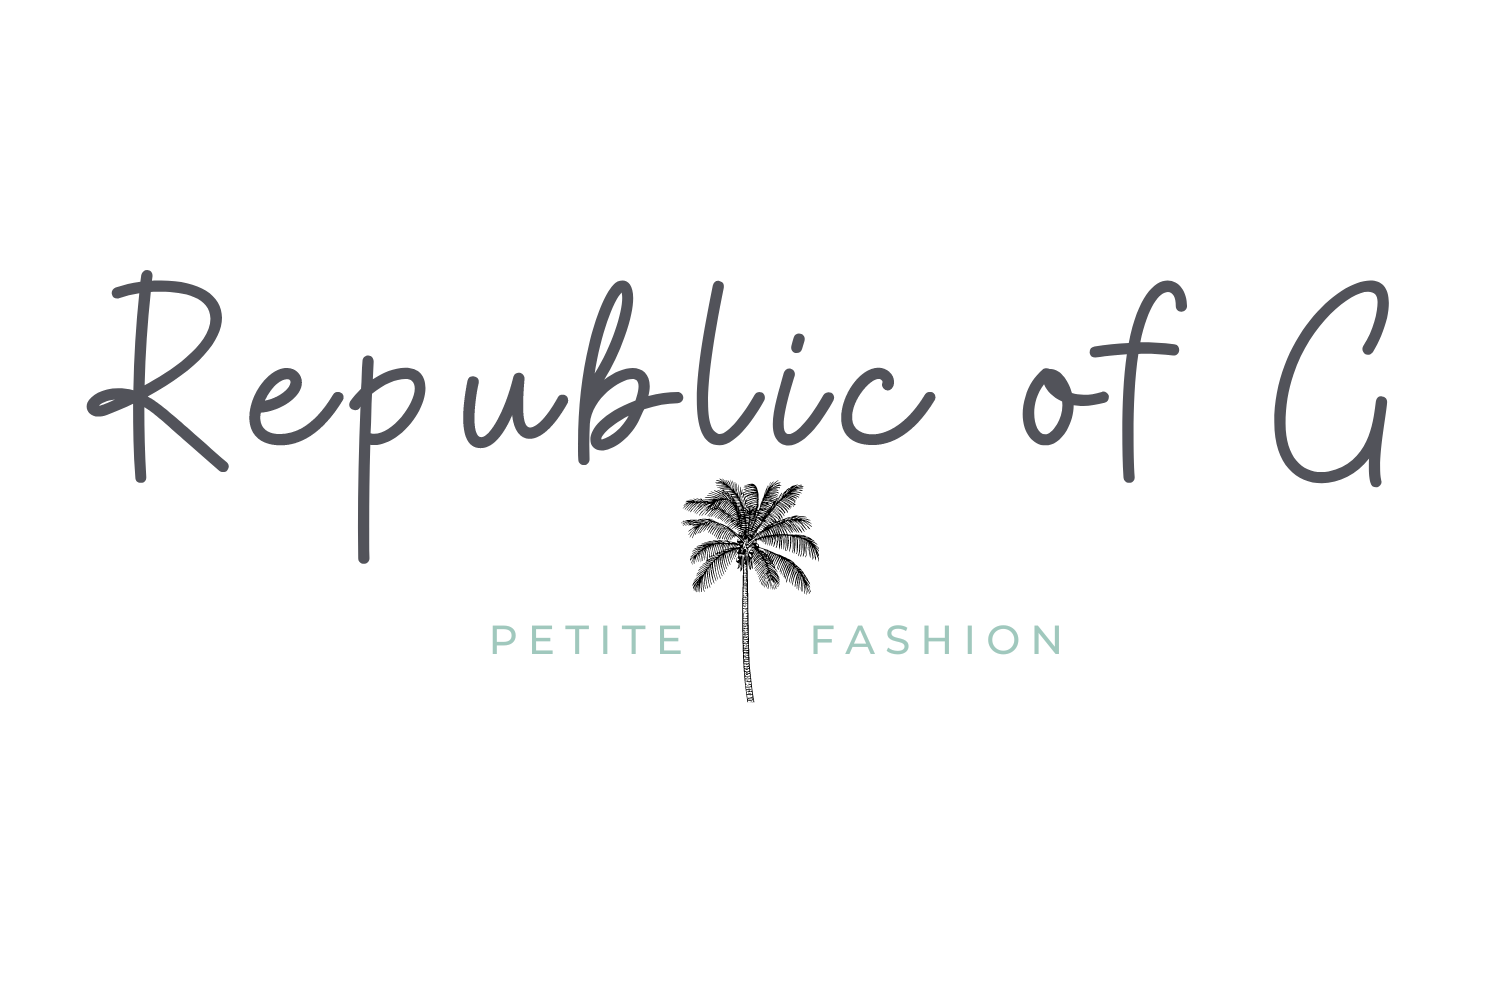 Republic of G | Petite Fashion &amp; Sewing